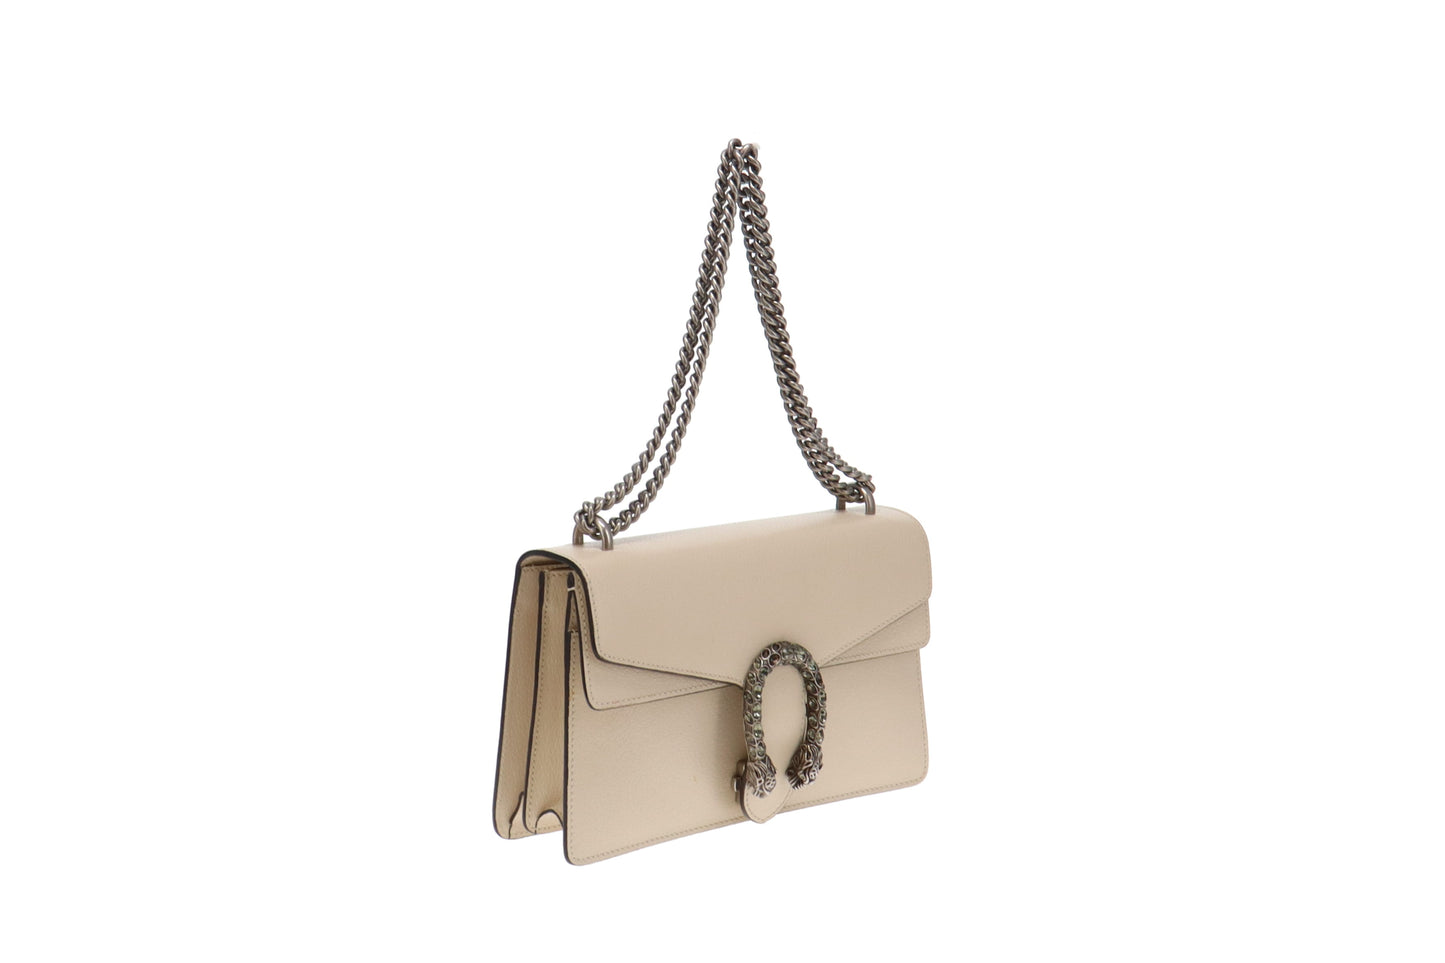 Gucci Cream Leather Small Dionysus Shoulder Bag